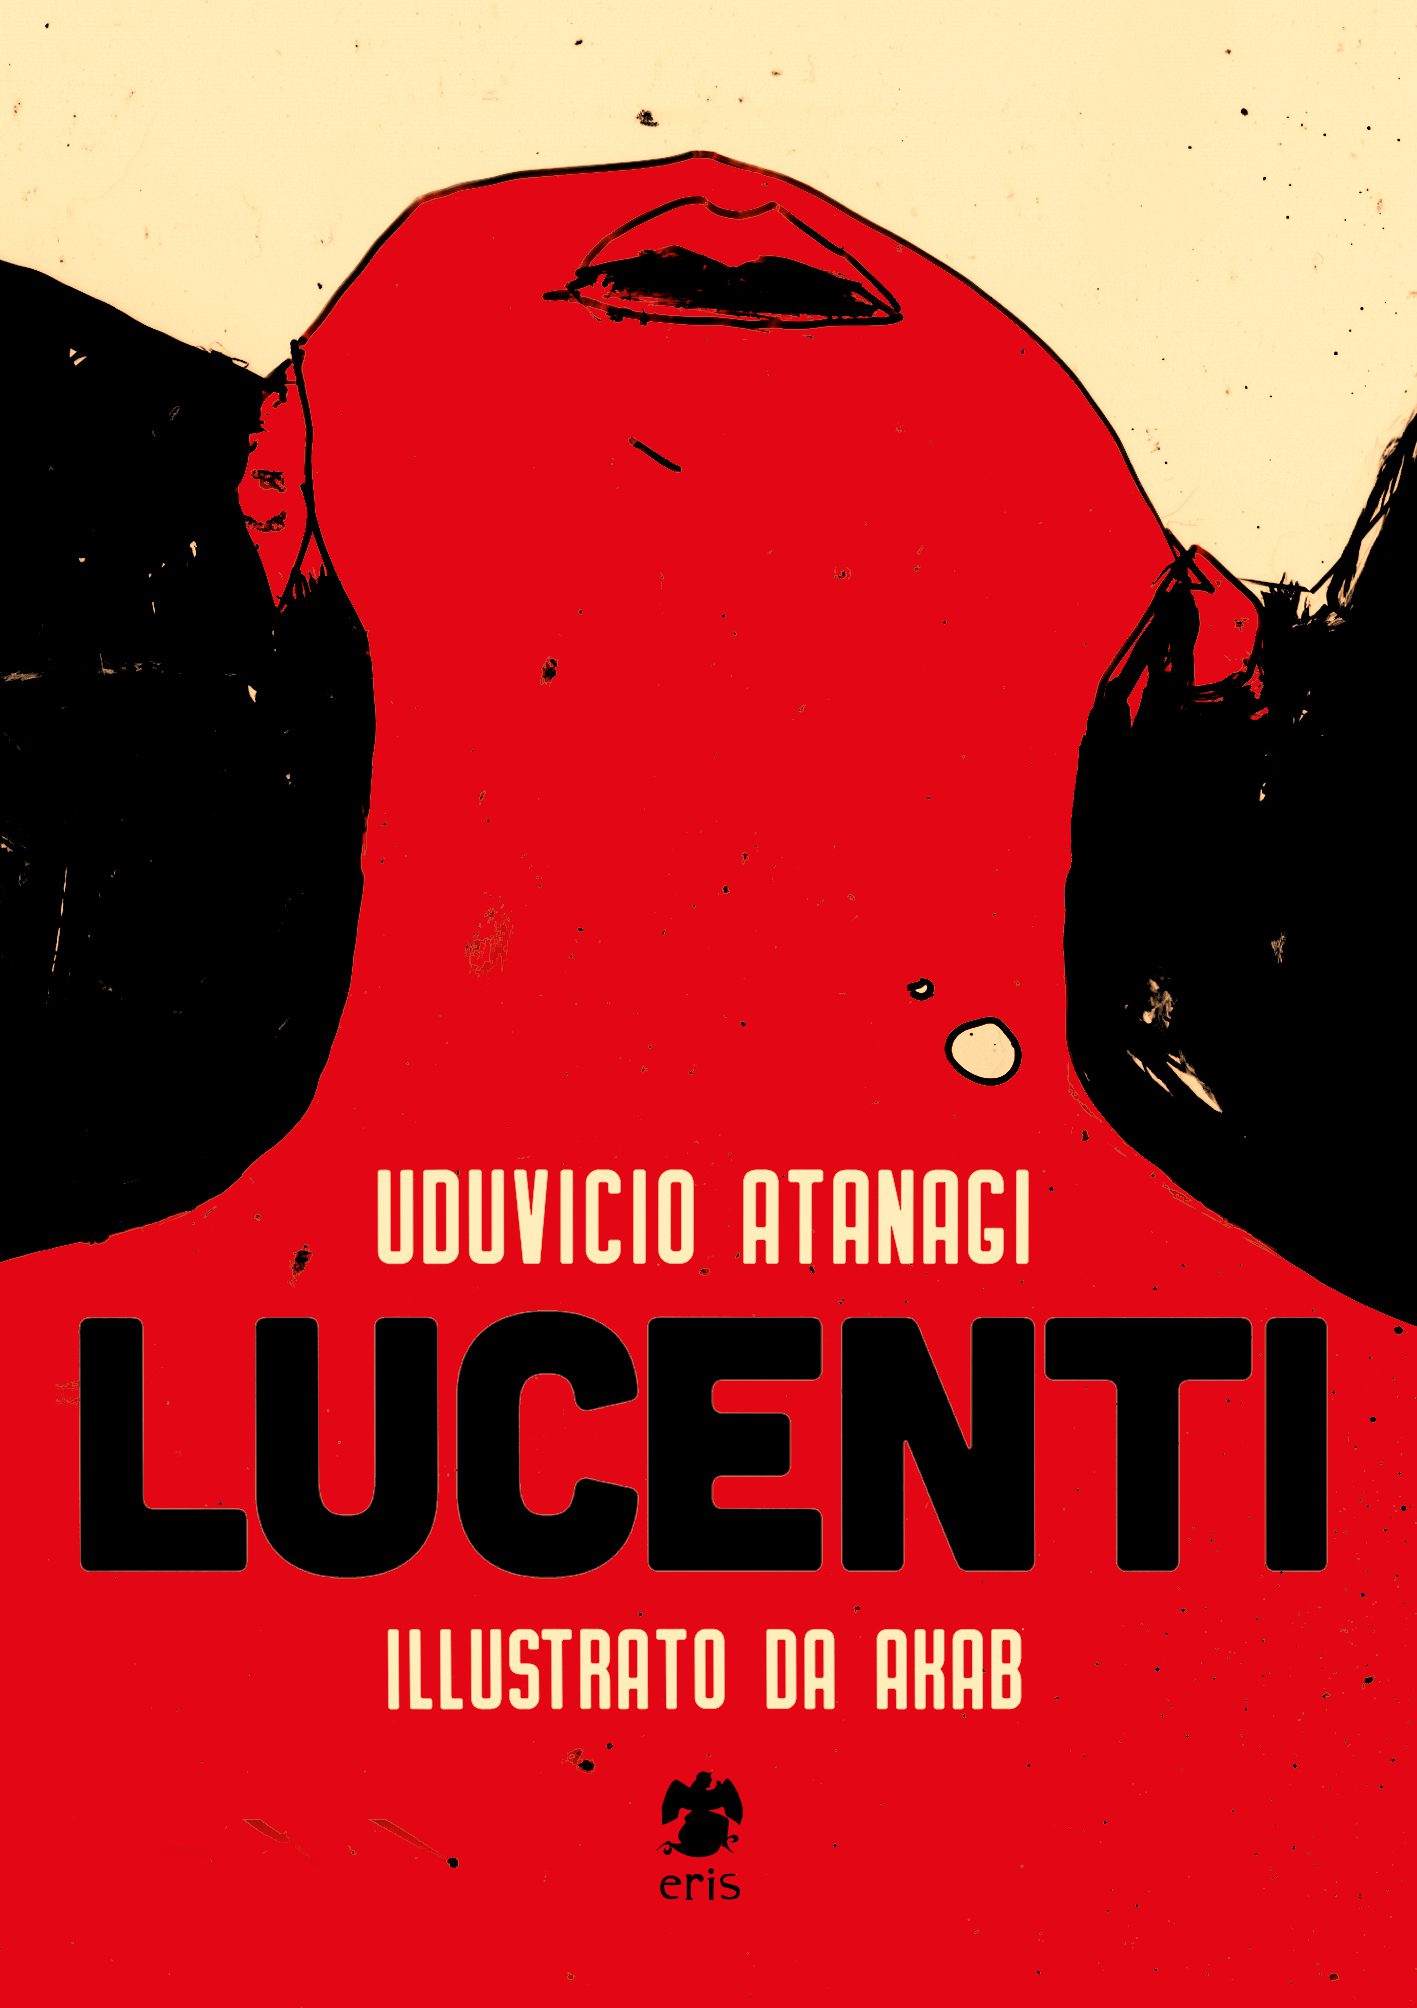 Bosco - Lucenti, Uduvicio Atanagi (Eris Edizioni, 2018)